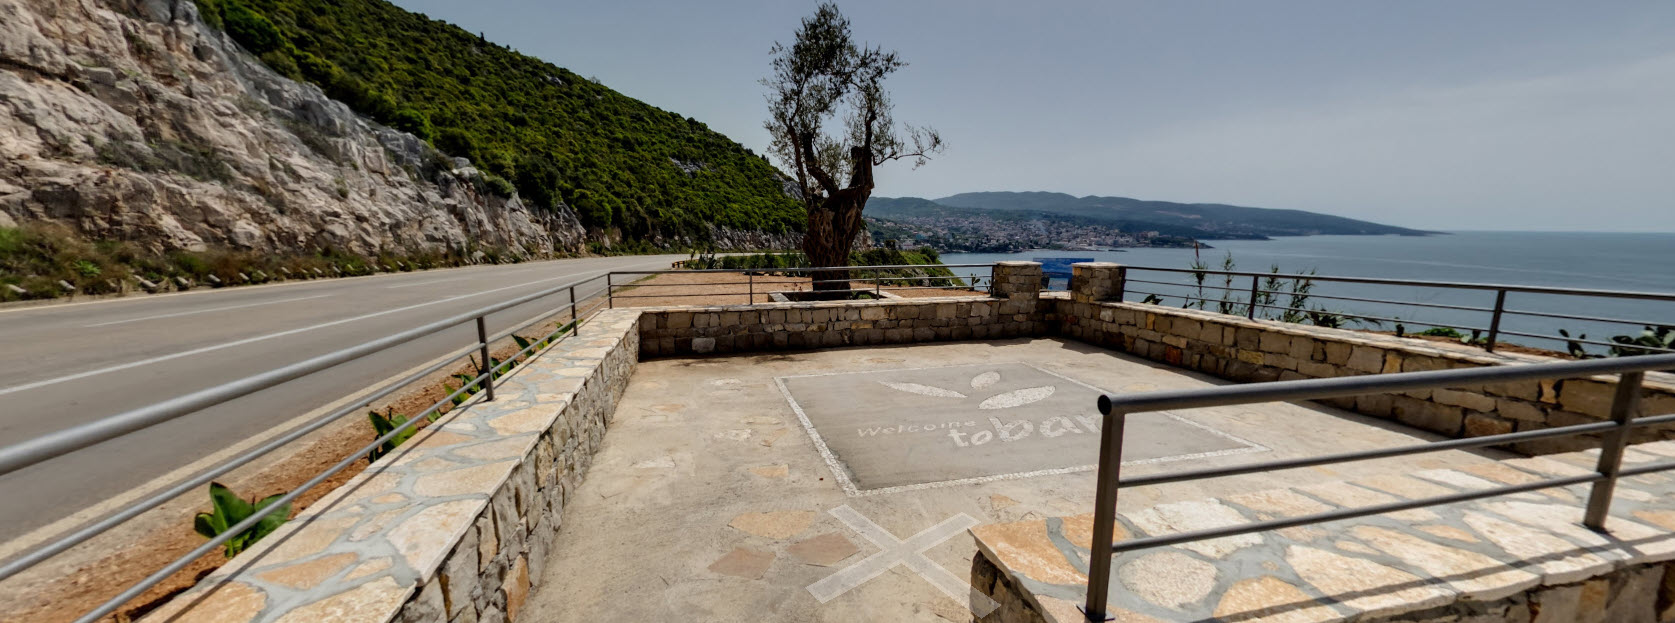 360 montenegro viewpoint bar